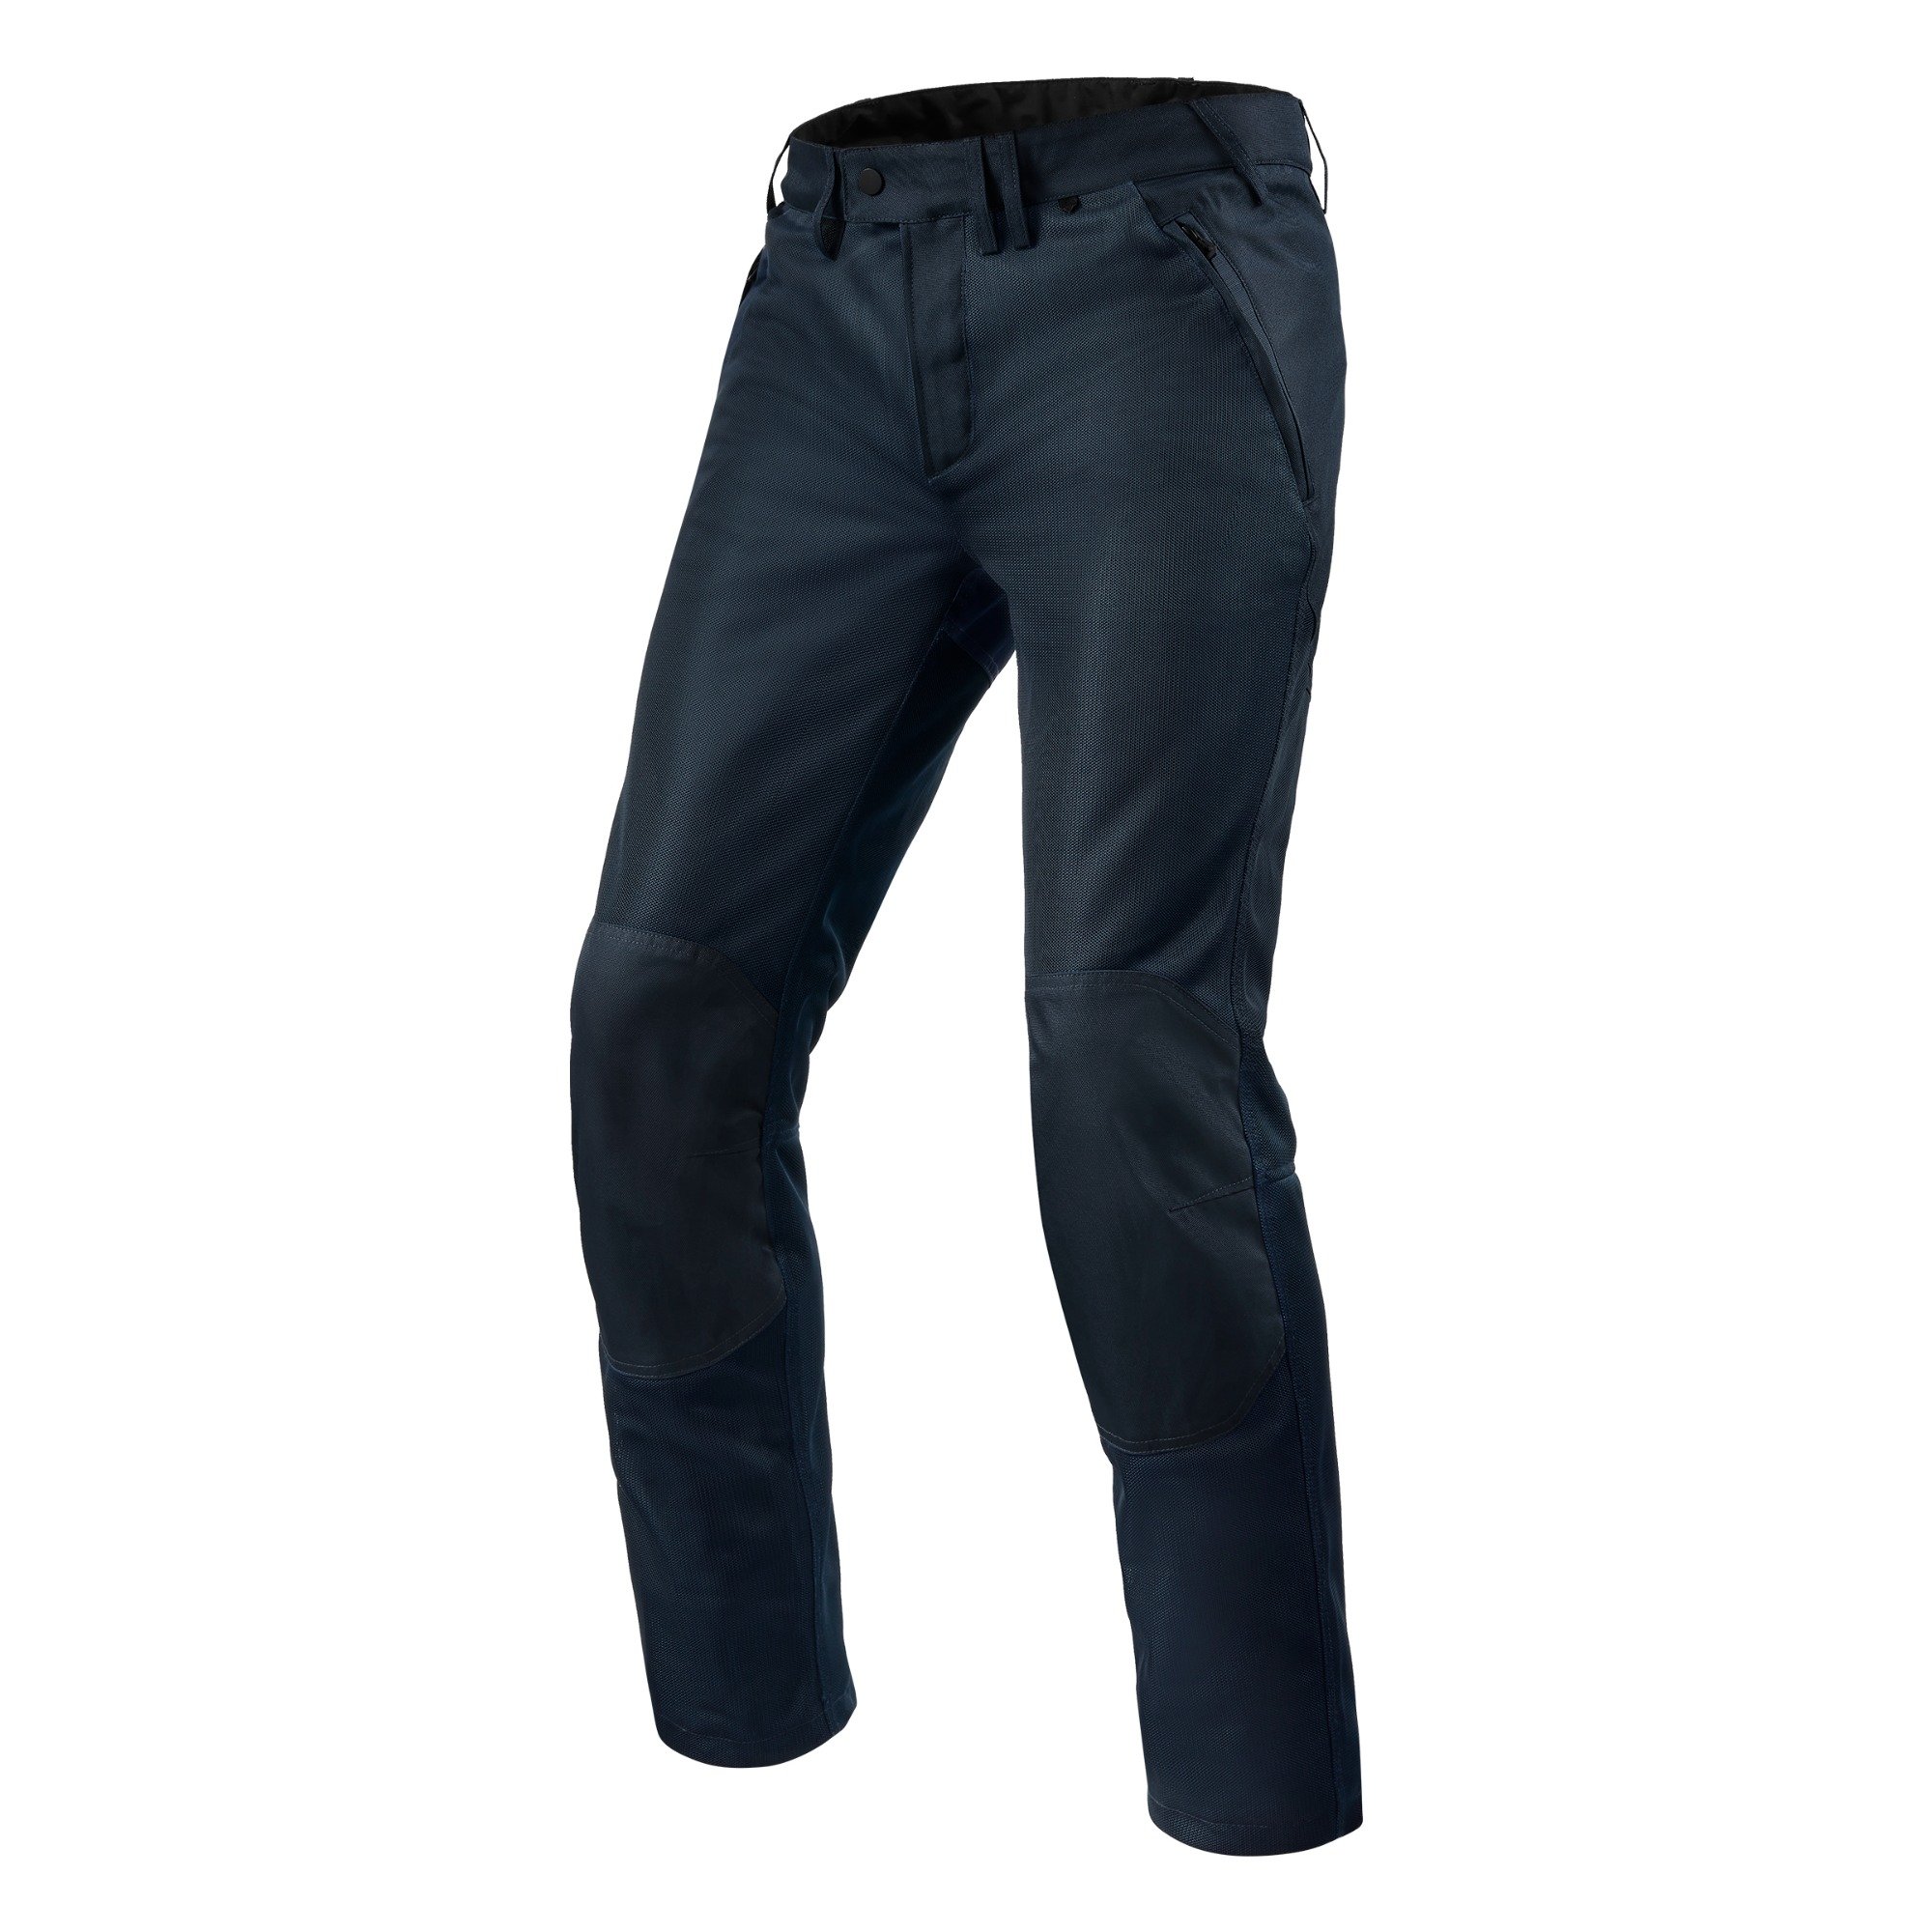 Image of REV'IT! Pants Eclipse 2 Dark Blue Long Motorcycle Pants Size 2XL ID 8700001369107